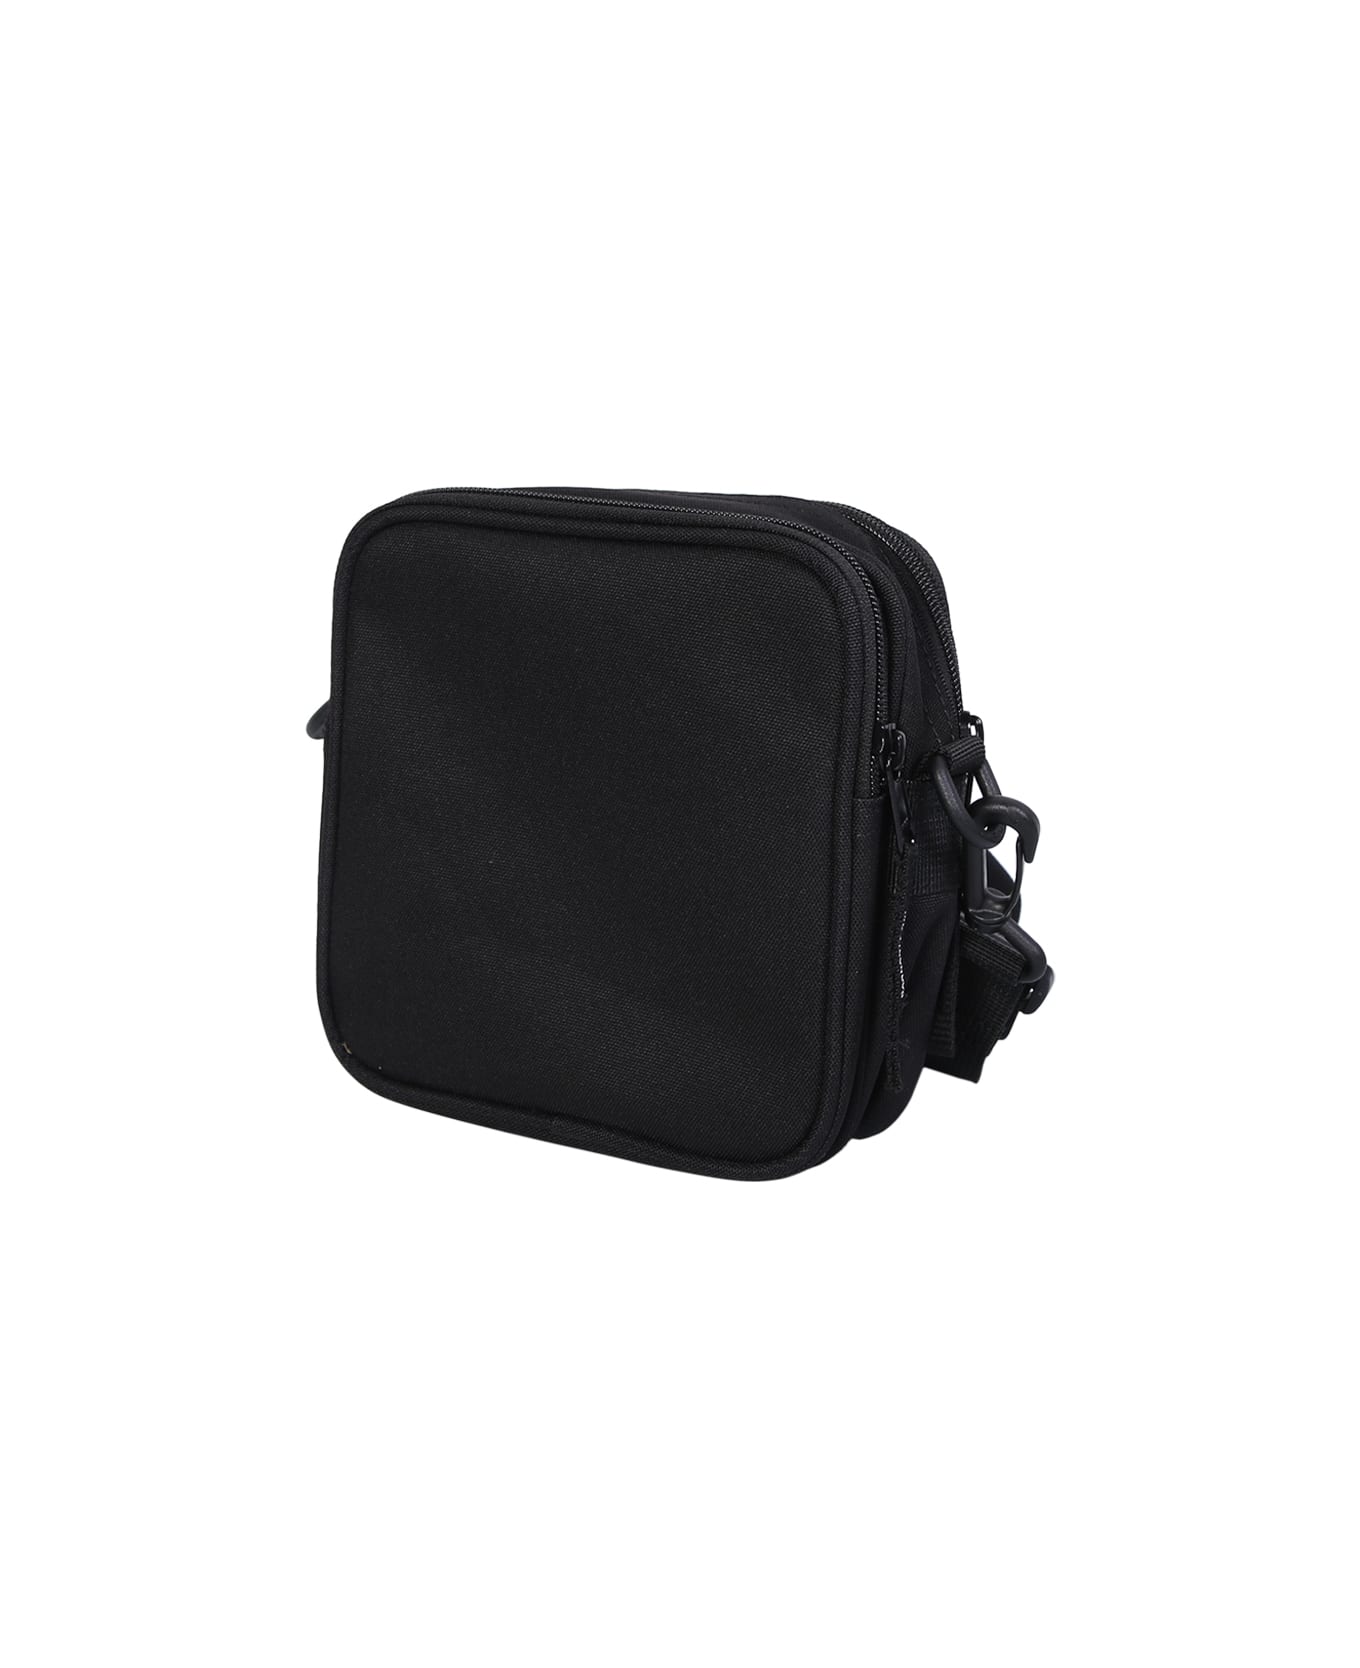 Carhartt Wip Essentials Black Crossbody Bag - Black ショルダーバッグ